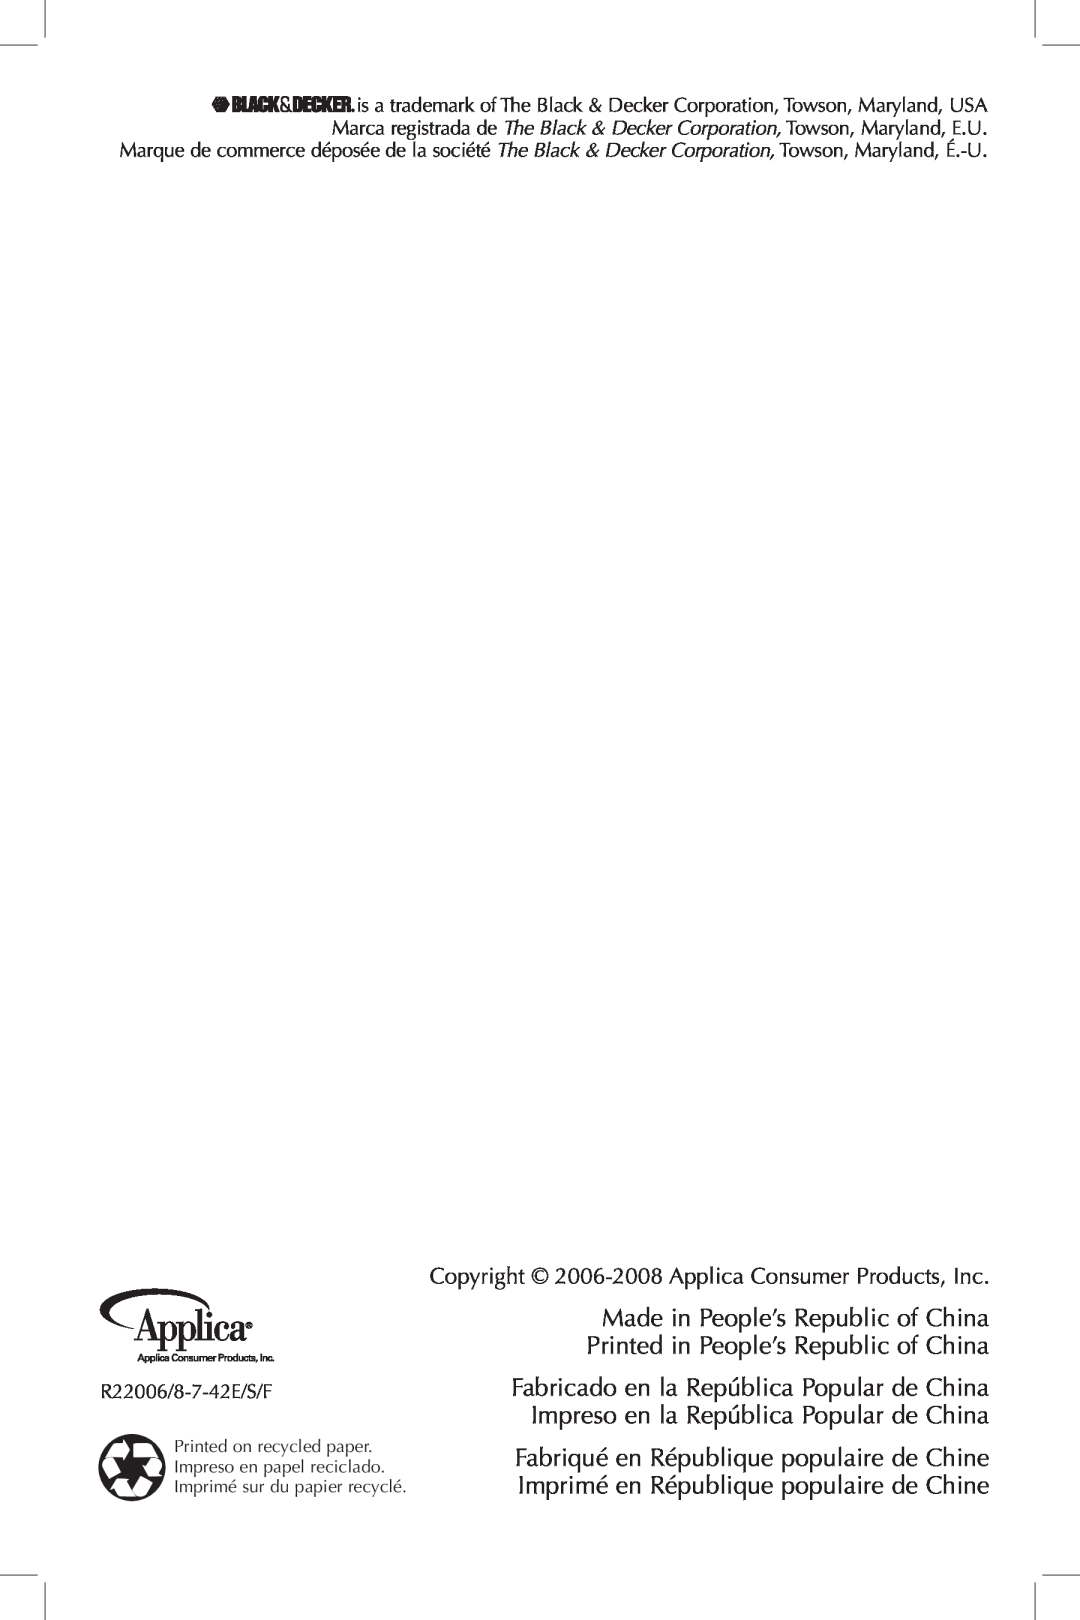 Black & Decker F2100 manual Copyright 2006-2008 Applica Consumer Products, Inc, R22006/8-7-42E/S/F 